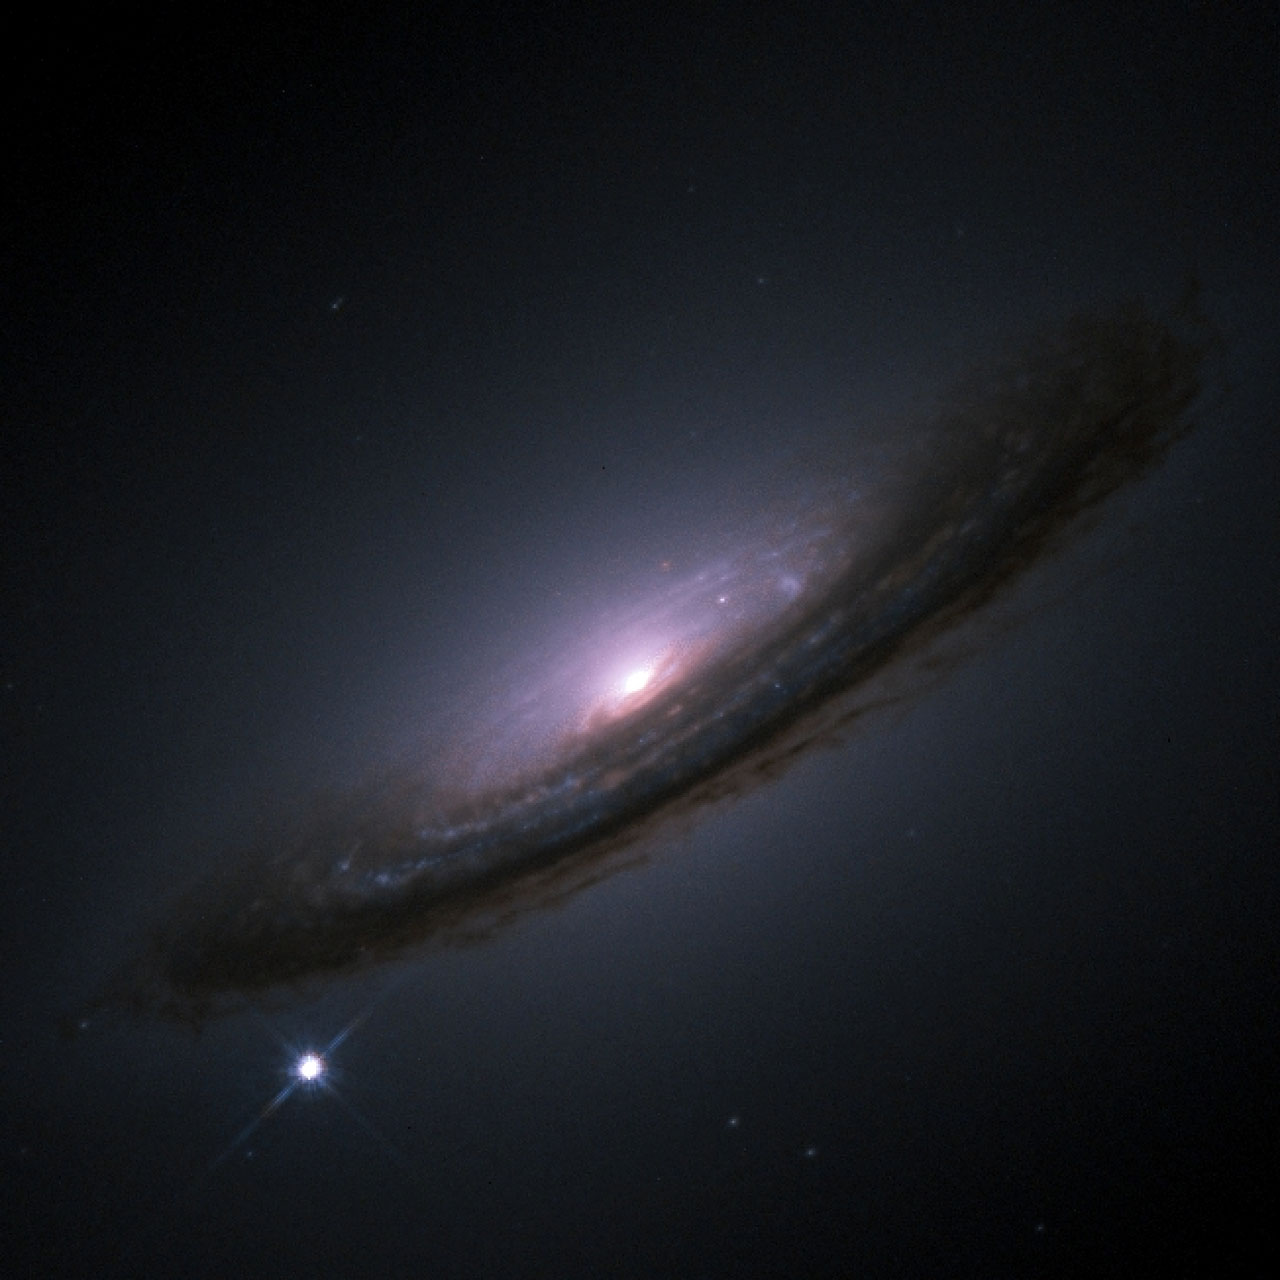 Credit: ESA/Hubble